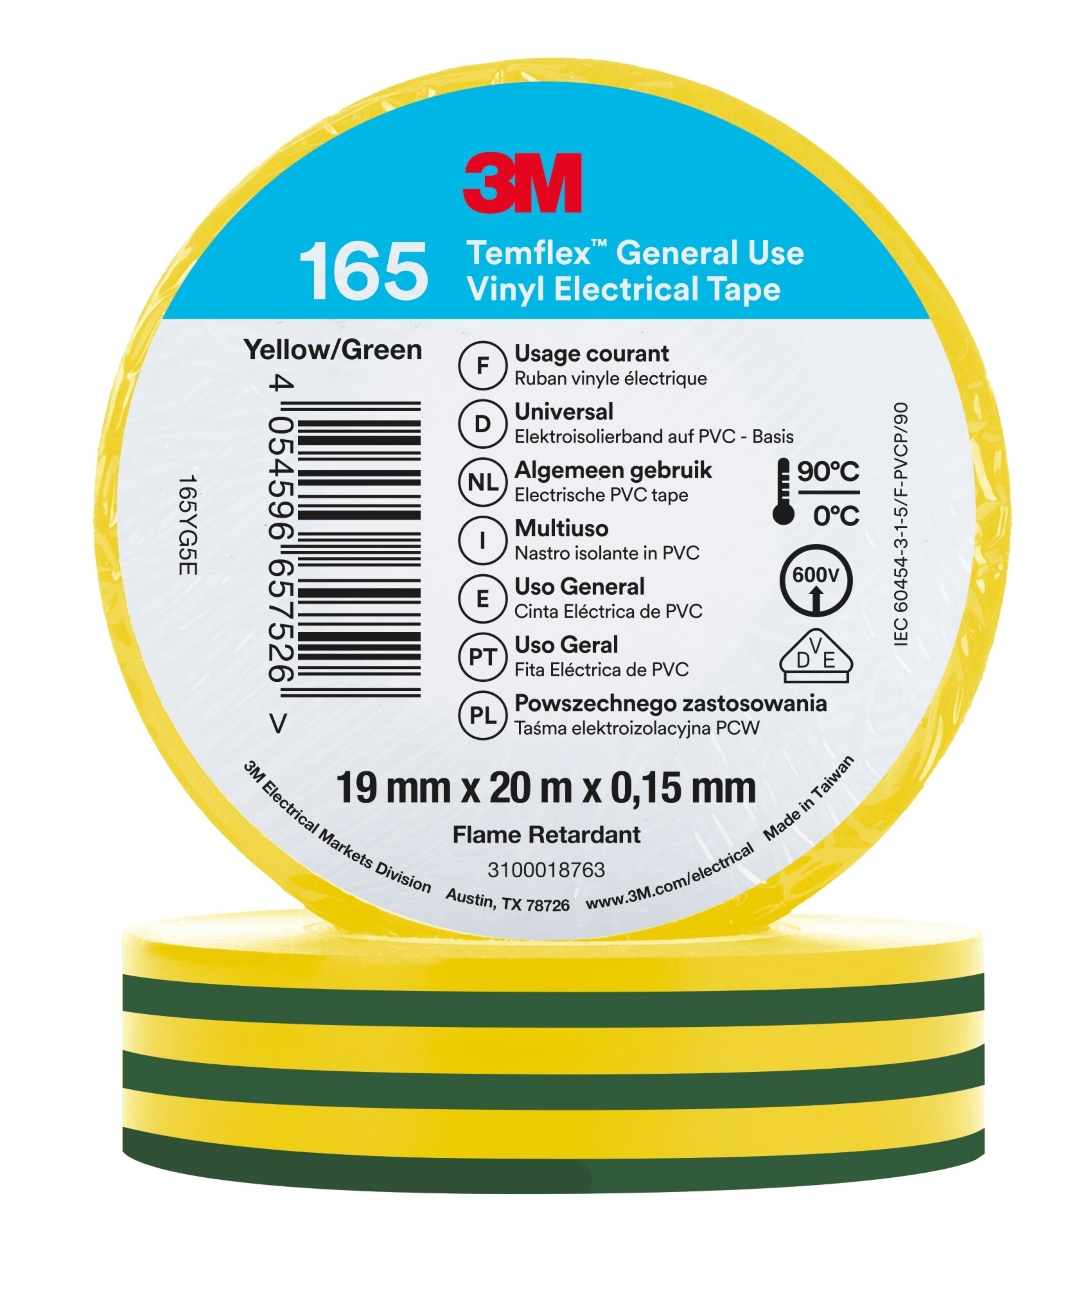 3M Temflex 165 vinyl electrical insulation tape, green/yellow, 19 mm x 20 m, 0.15 mm